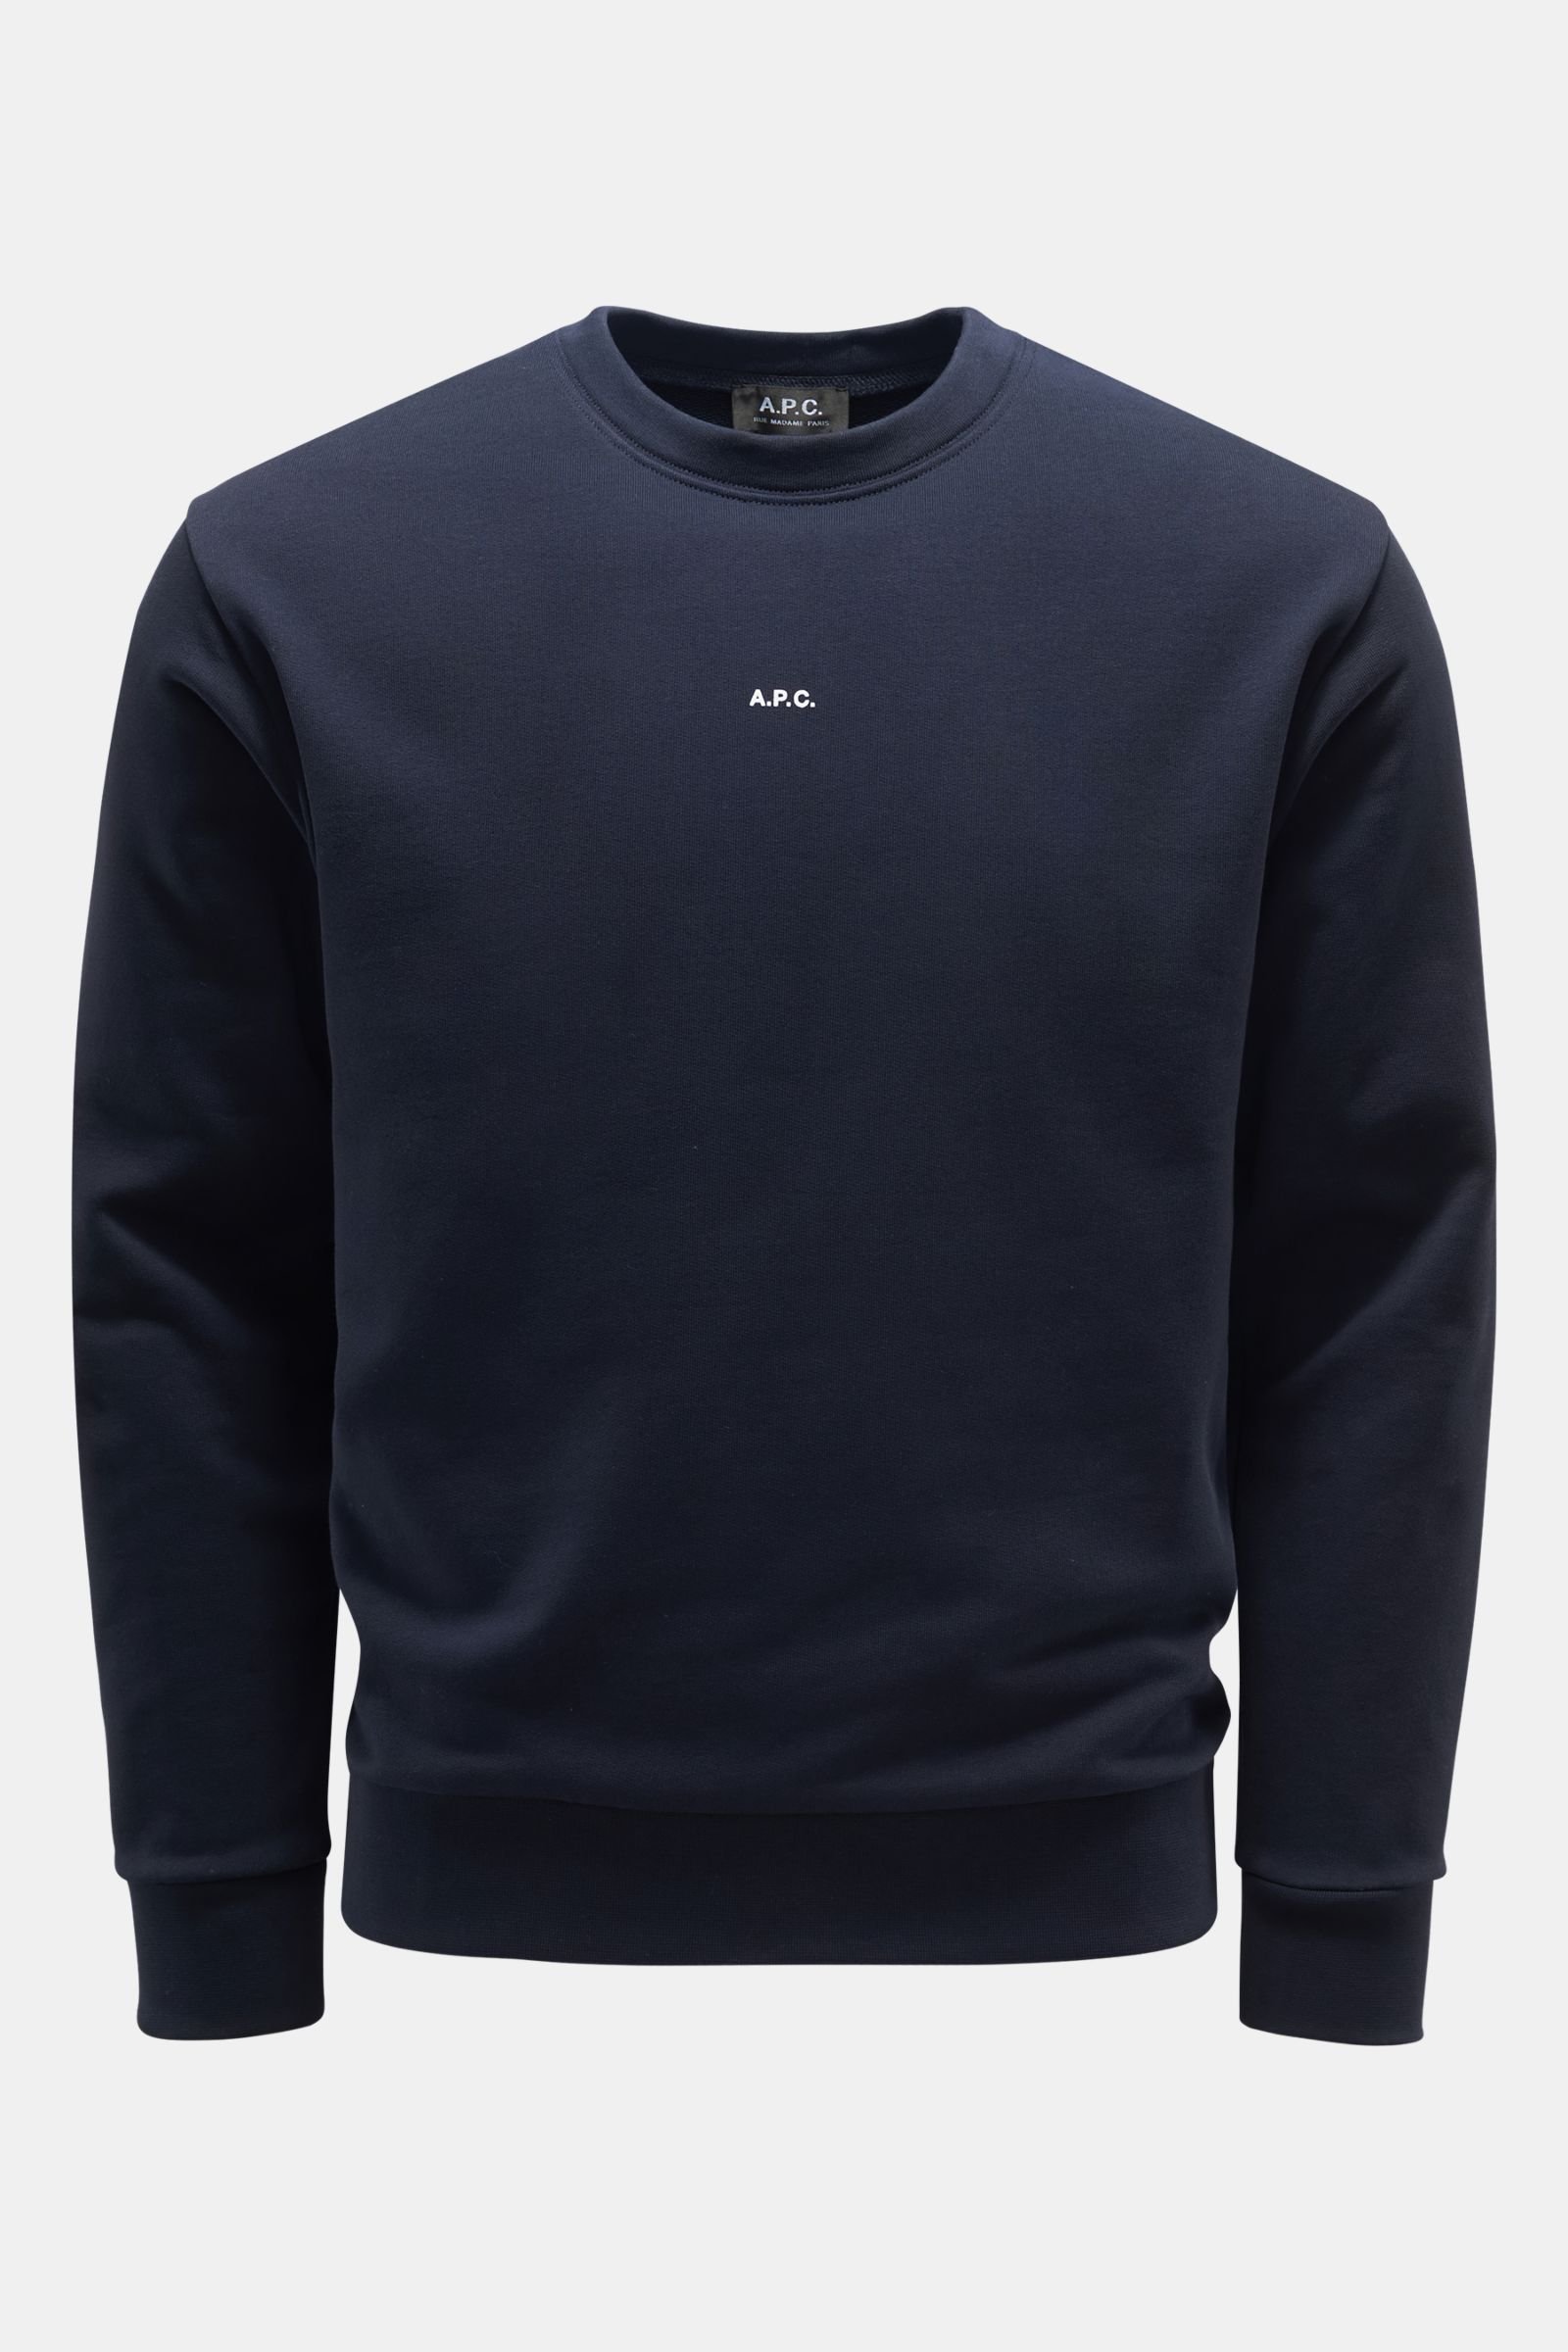 A.P.C. Crew neck sweatshirt ‘Steve’ navy | BRAUN Hamburg